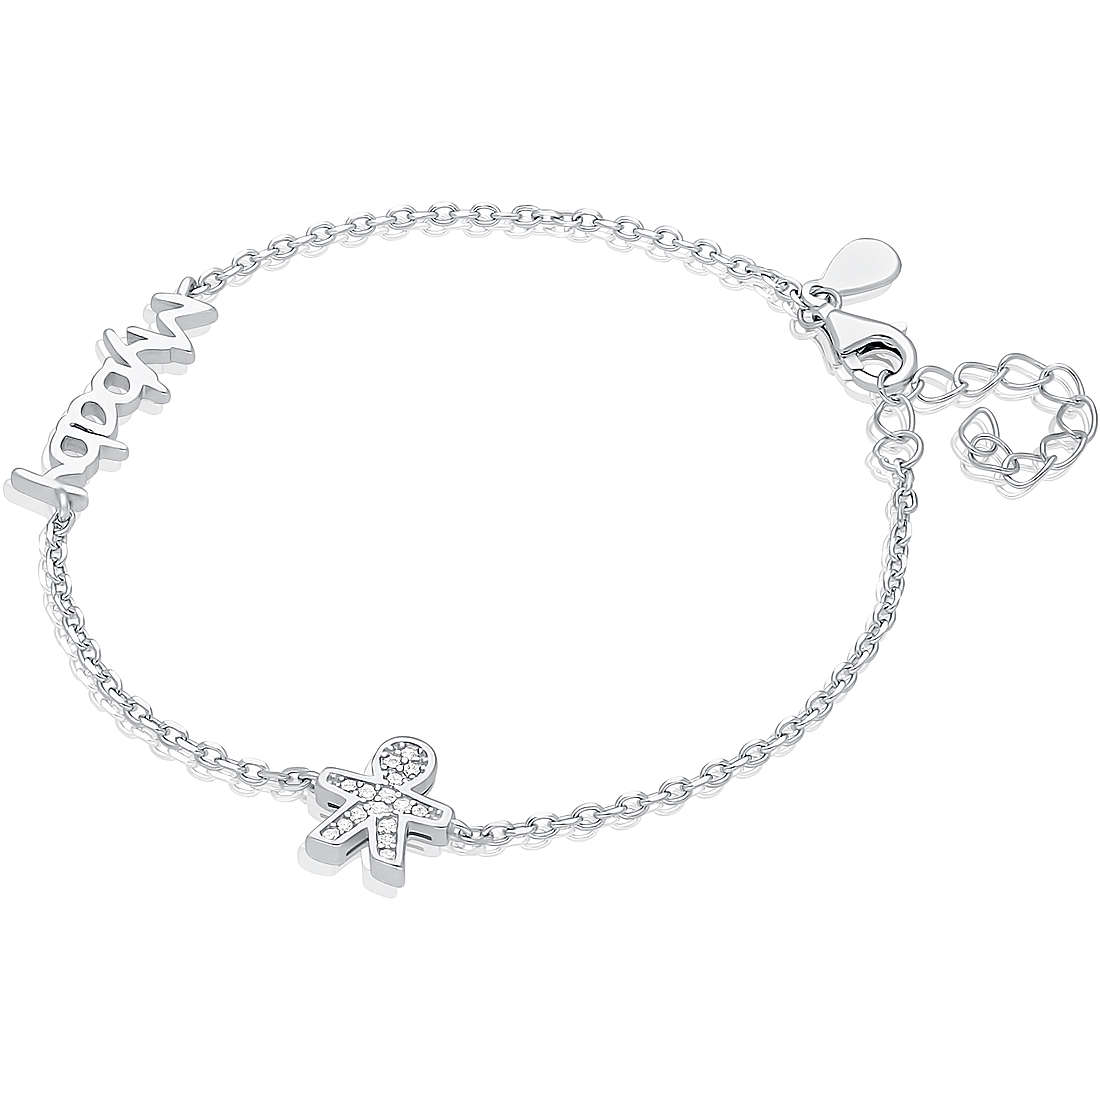 bracelet woman Chain 925 Silver jewel GioiaPura INS028BR315RHWH